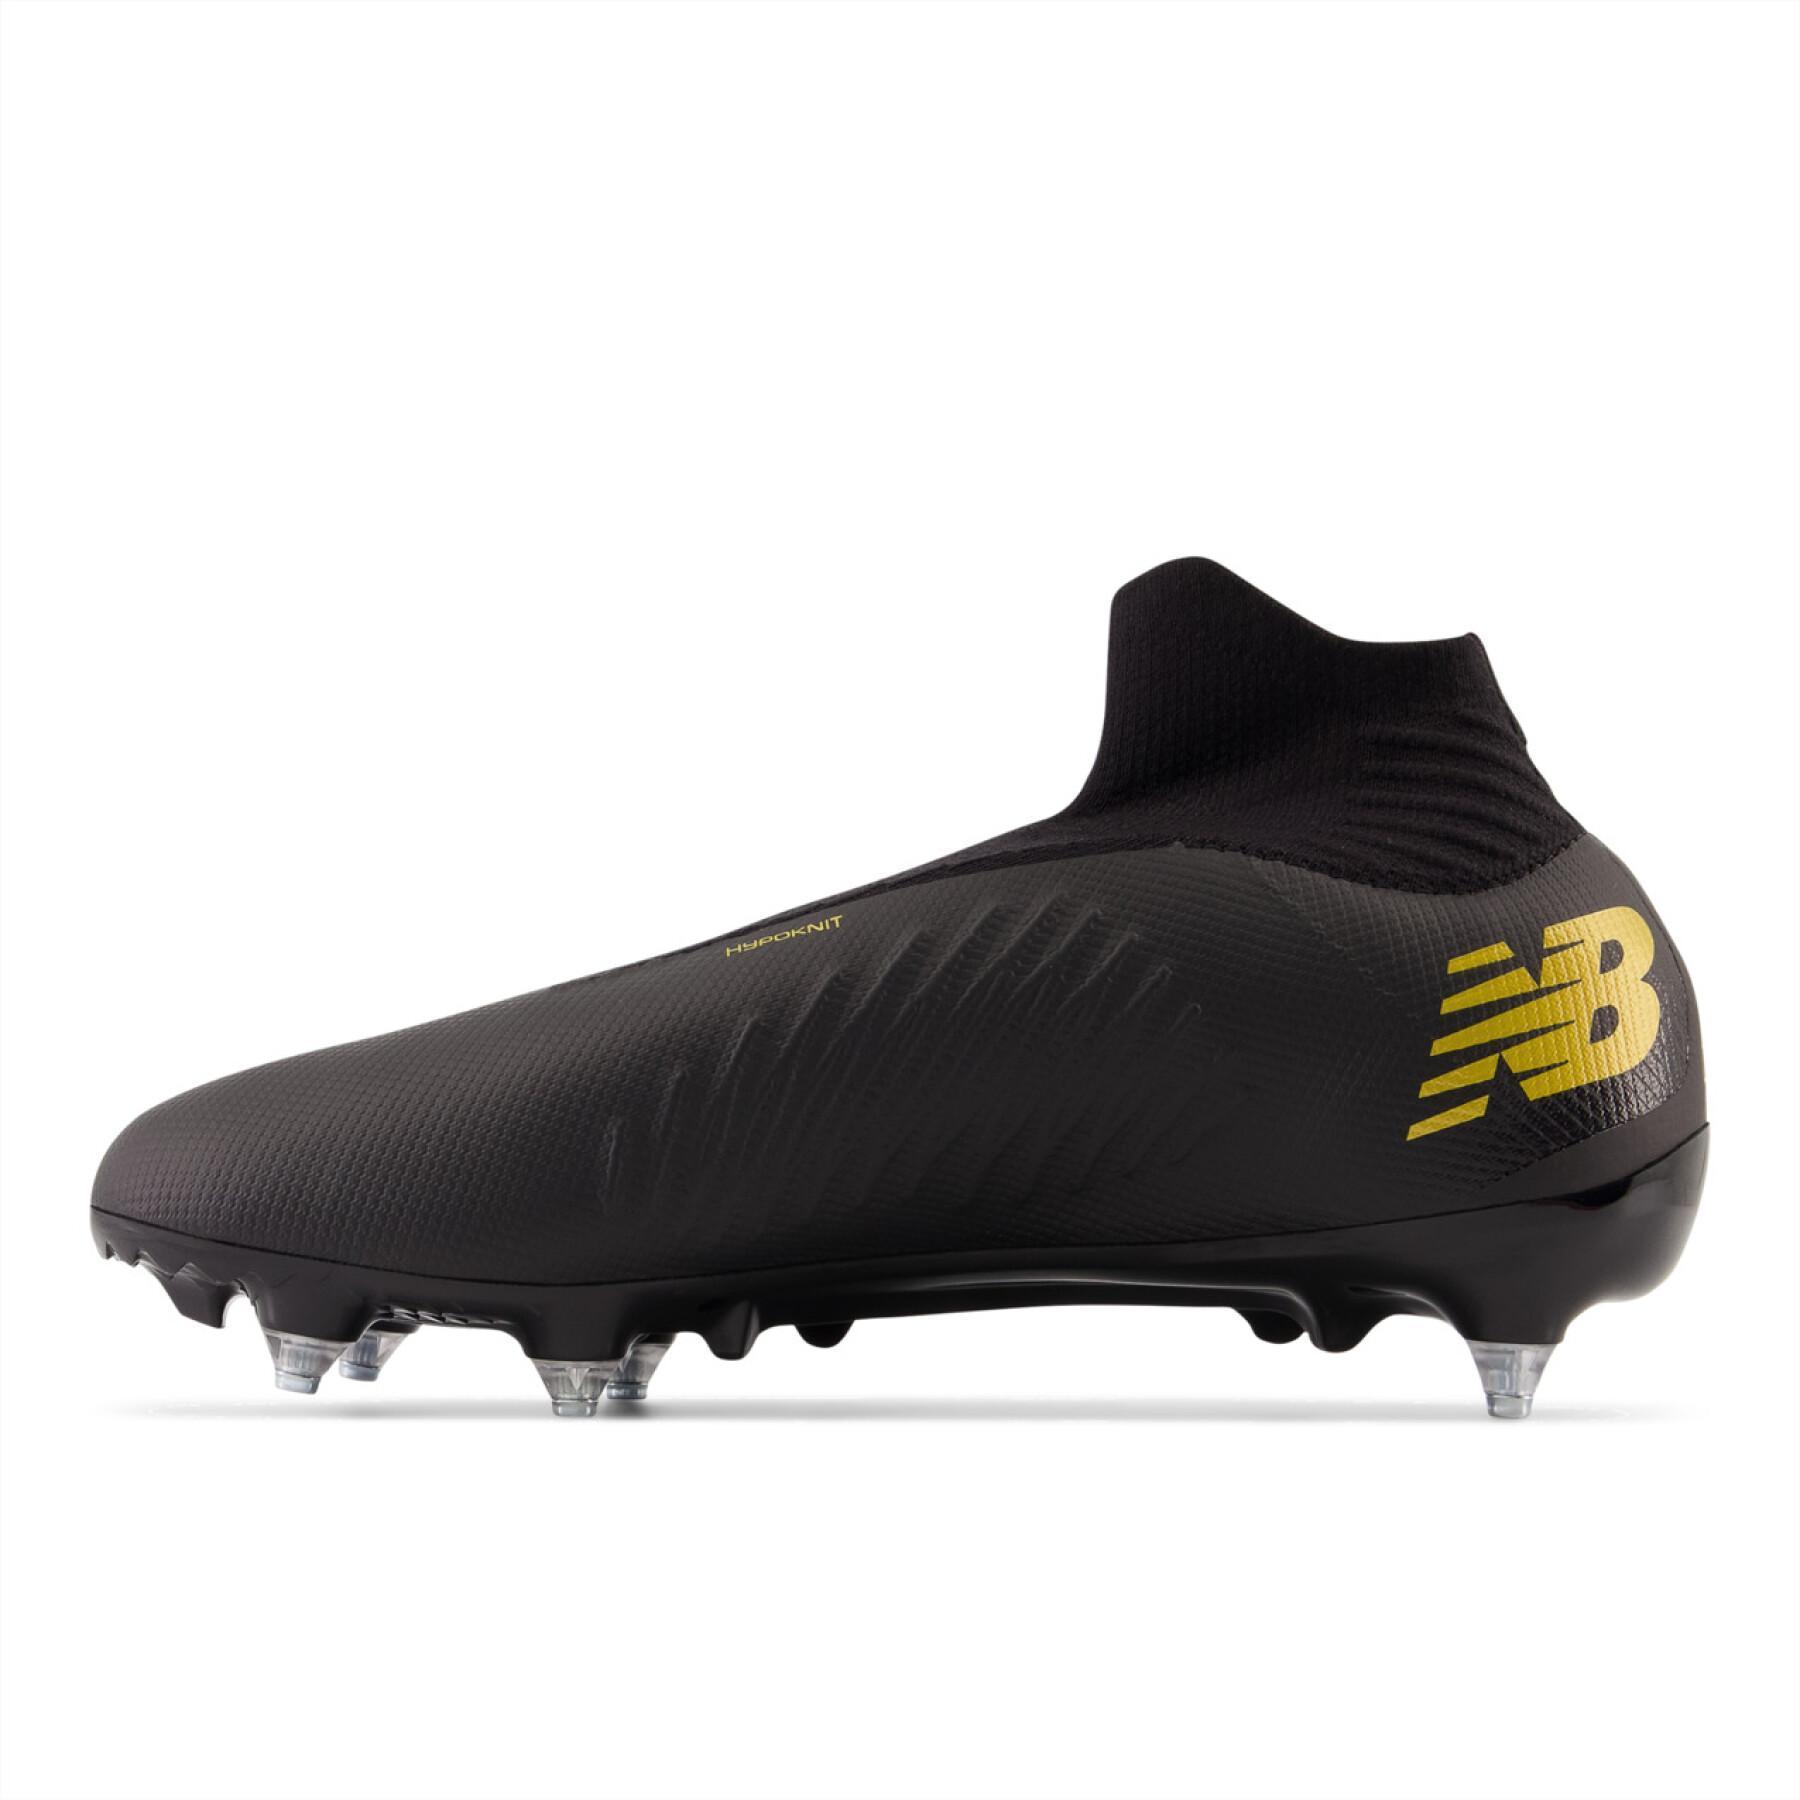 Soccer shoes New Balance Tekela v4 Magia SG